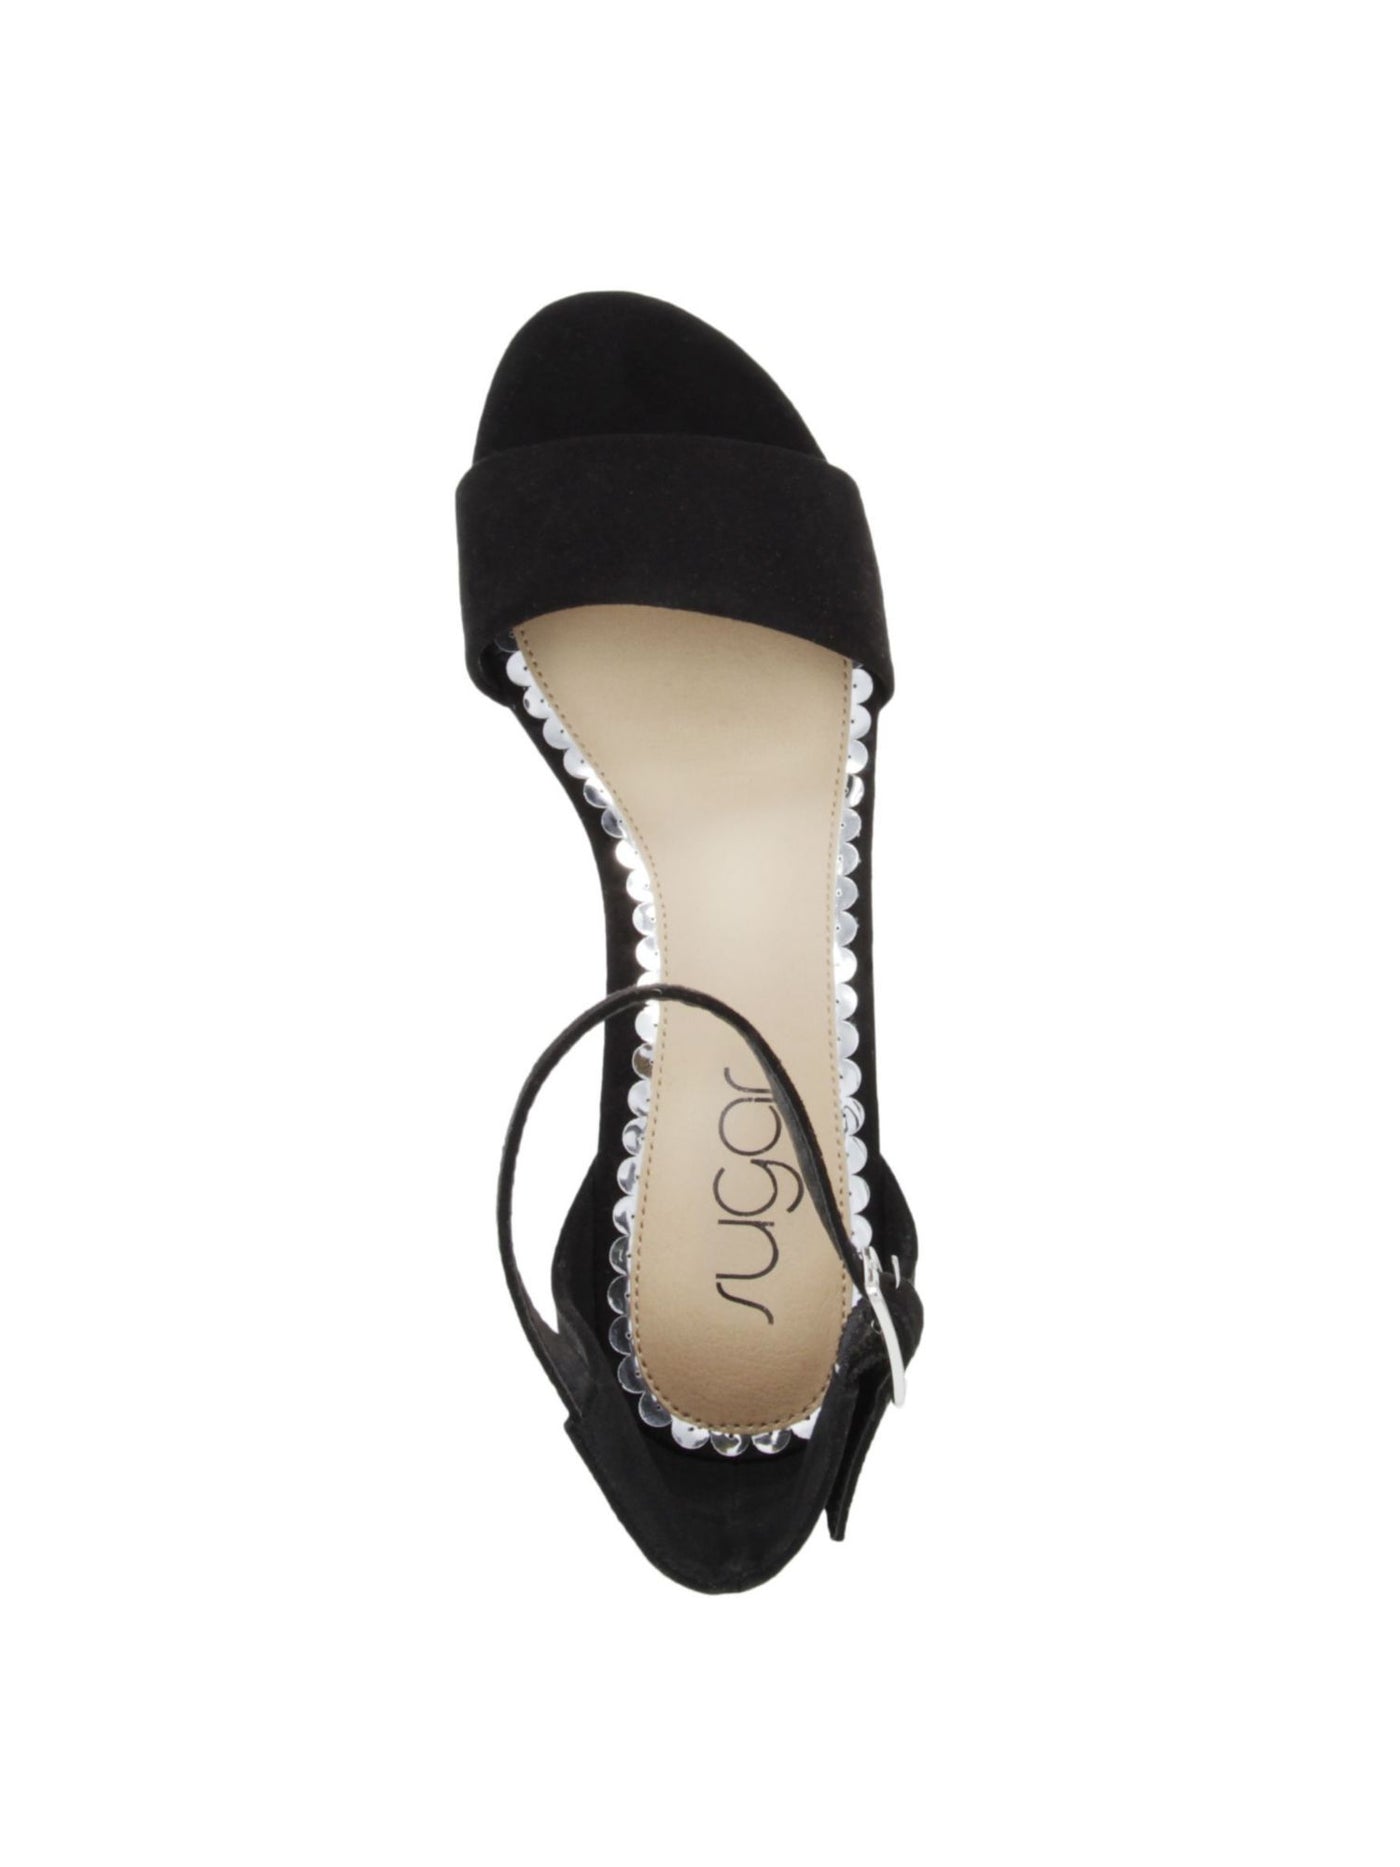 SUGAR Womens Black Adjustable Strap Noelle Low Open Toe Block Heel Buckle Dress Sandals 9.5 M